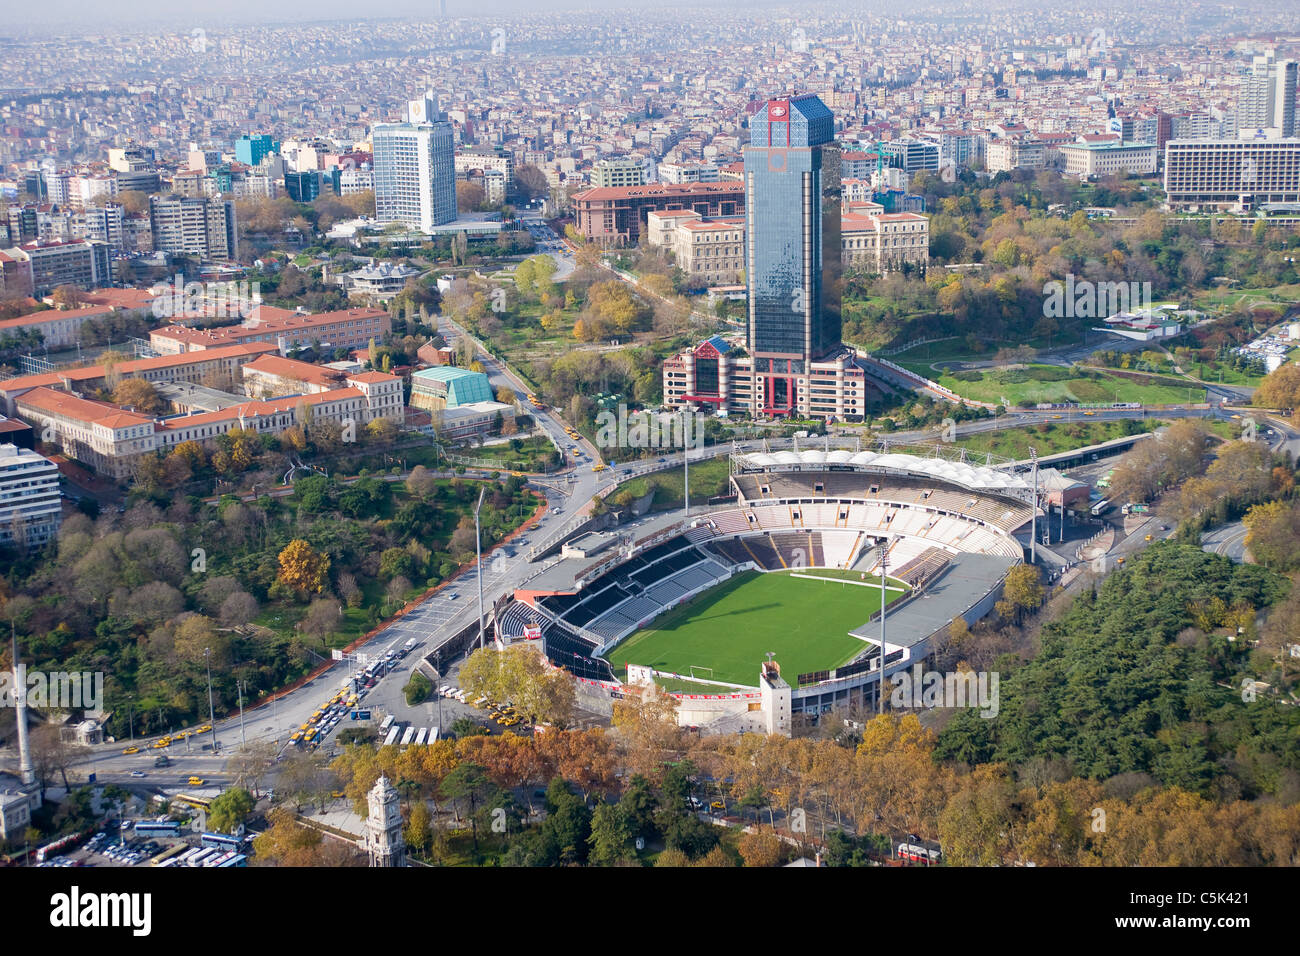 Inonu Stadium, ITU Engineering Faculties complex, and Suzer Plaza aerial, Istanbul - 2010 European Capital of Culture - Turkey Stock Photo